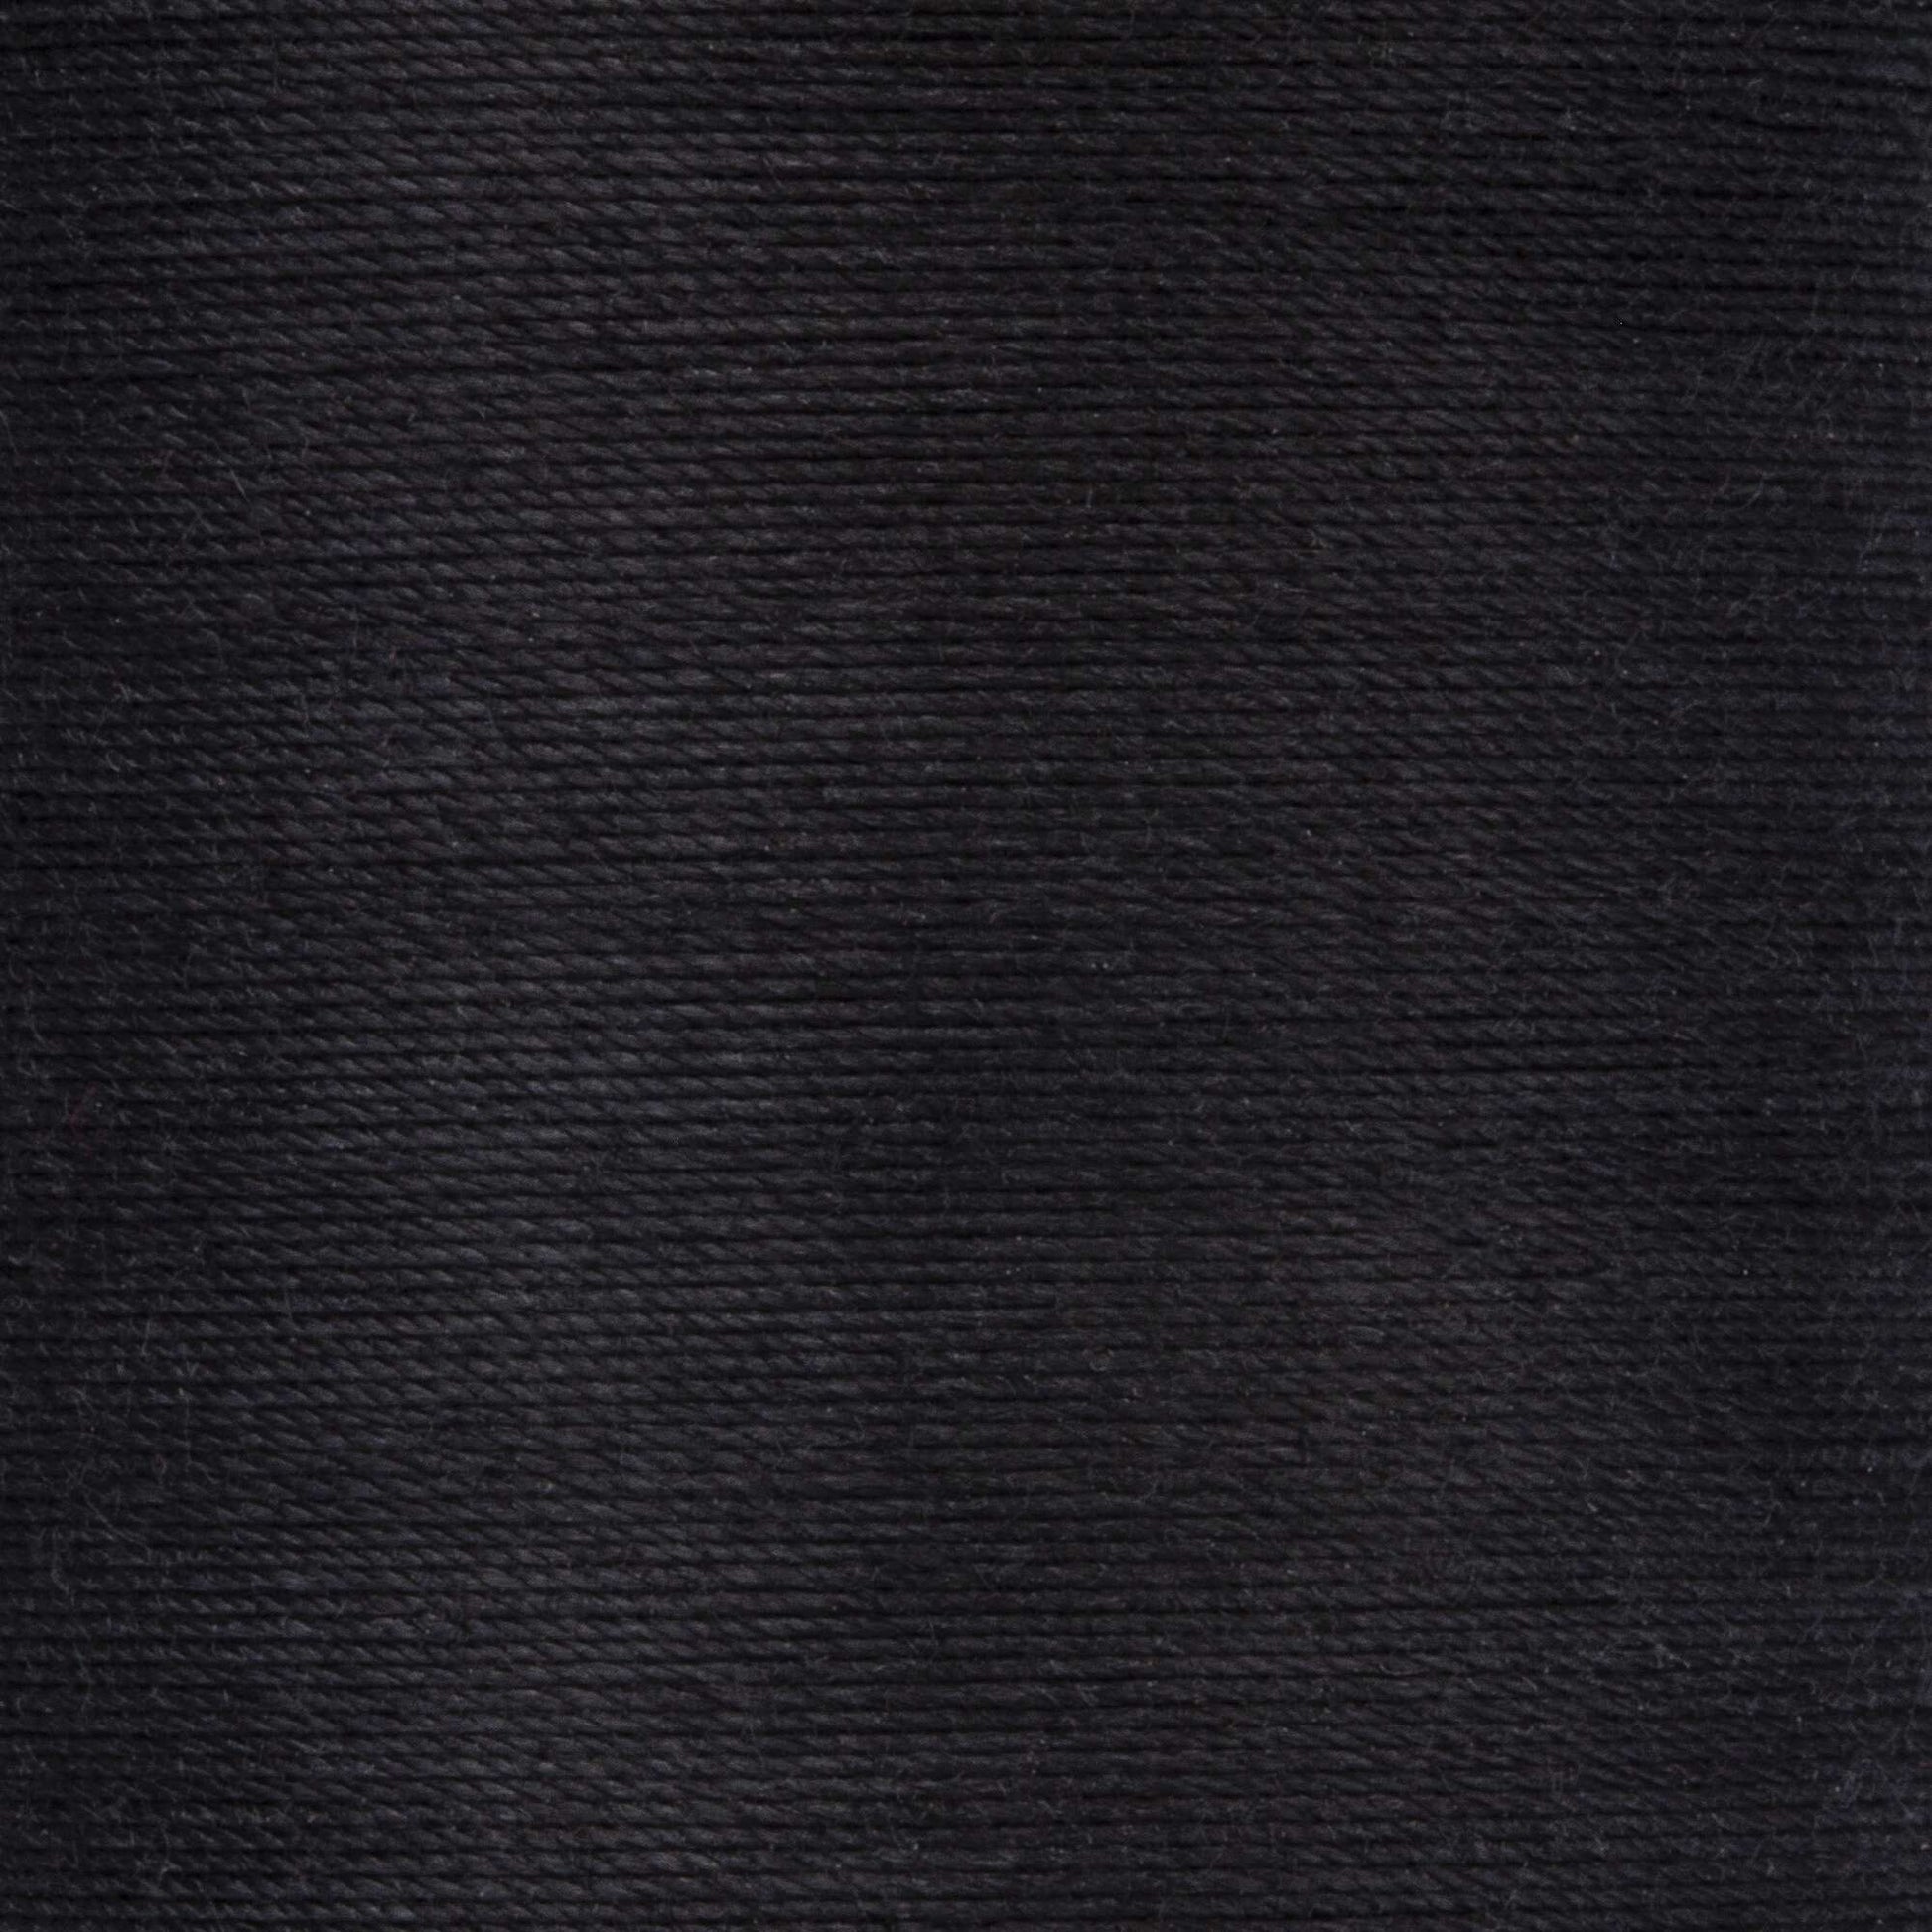 Coats & Clark Cotton Machine Quilting Thread (350 Yards) Black